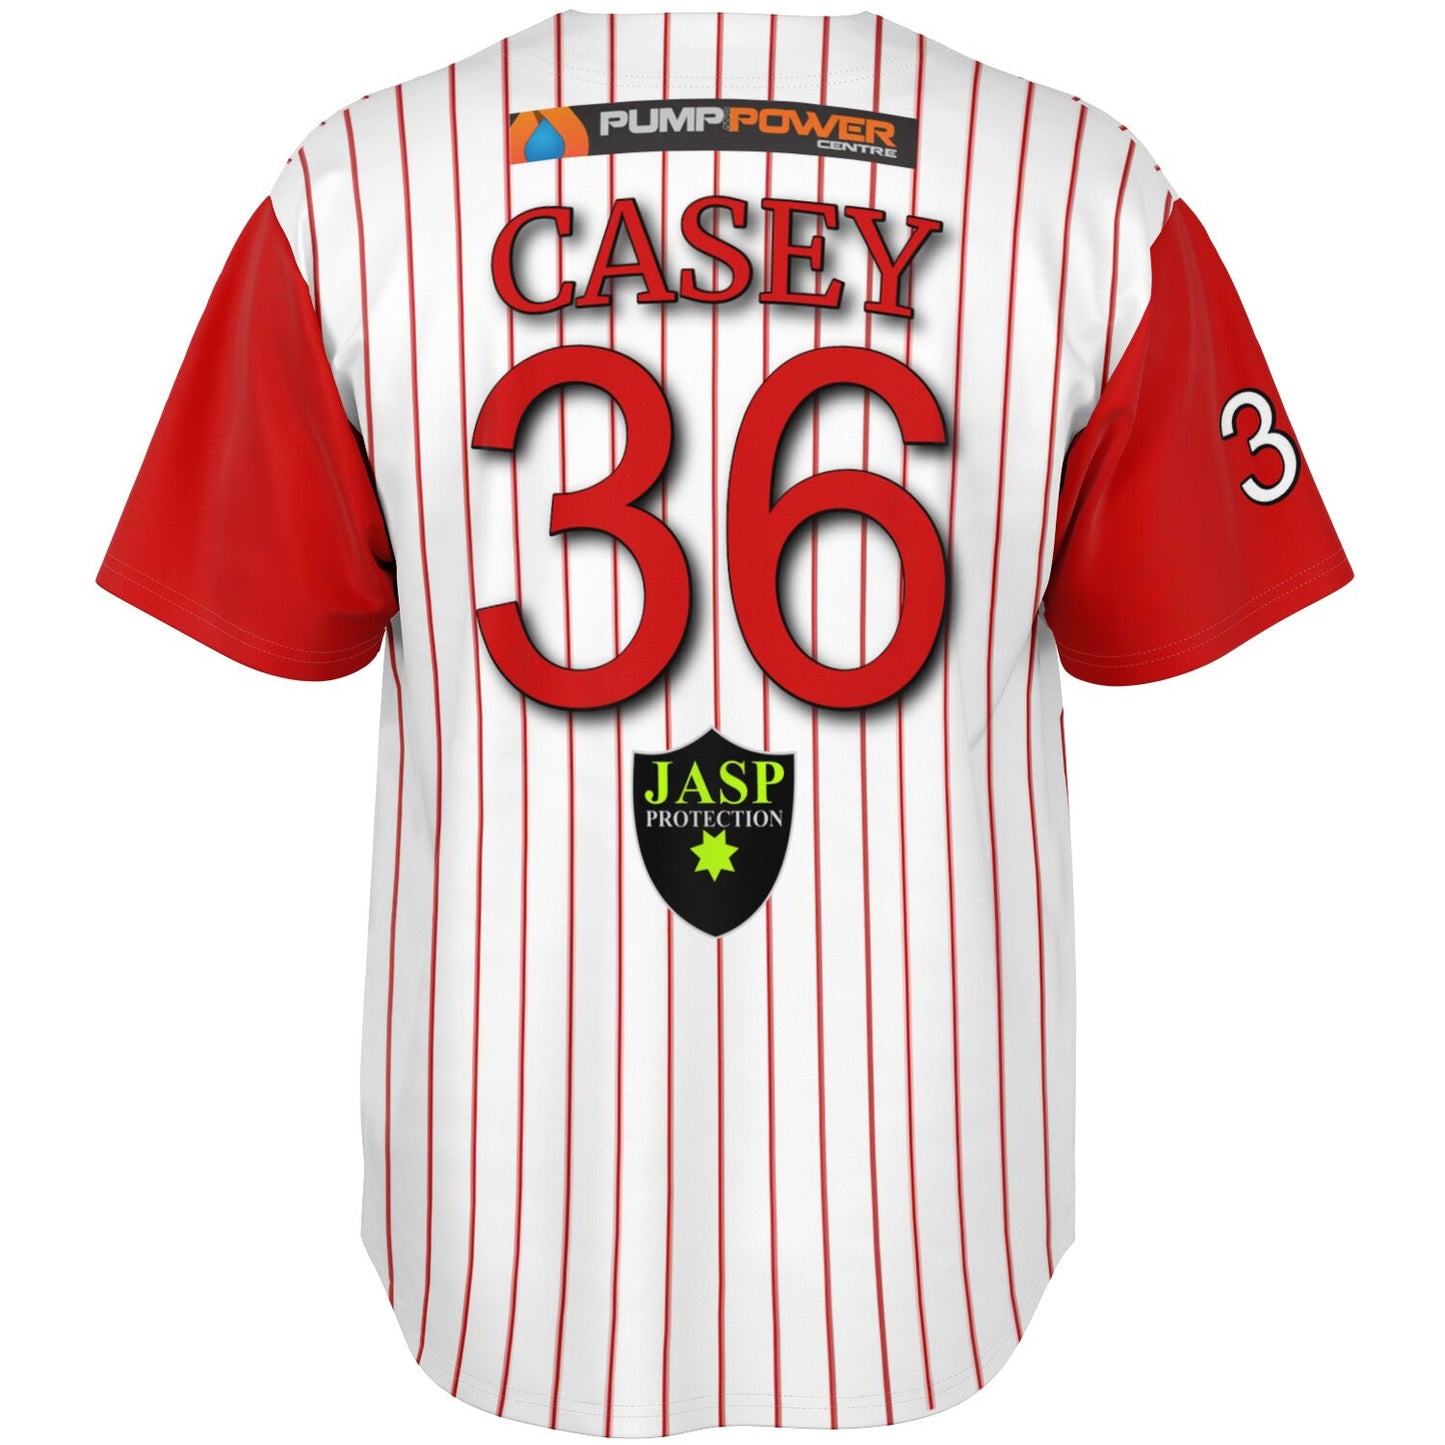 Casey #36 Demons Baseball Jersey - Home